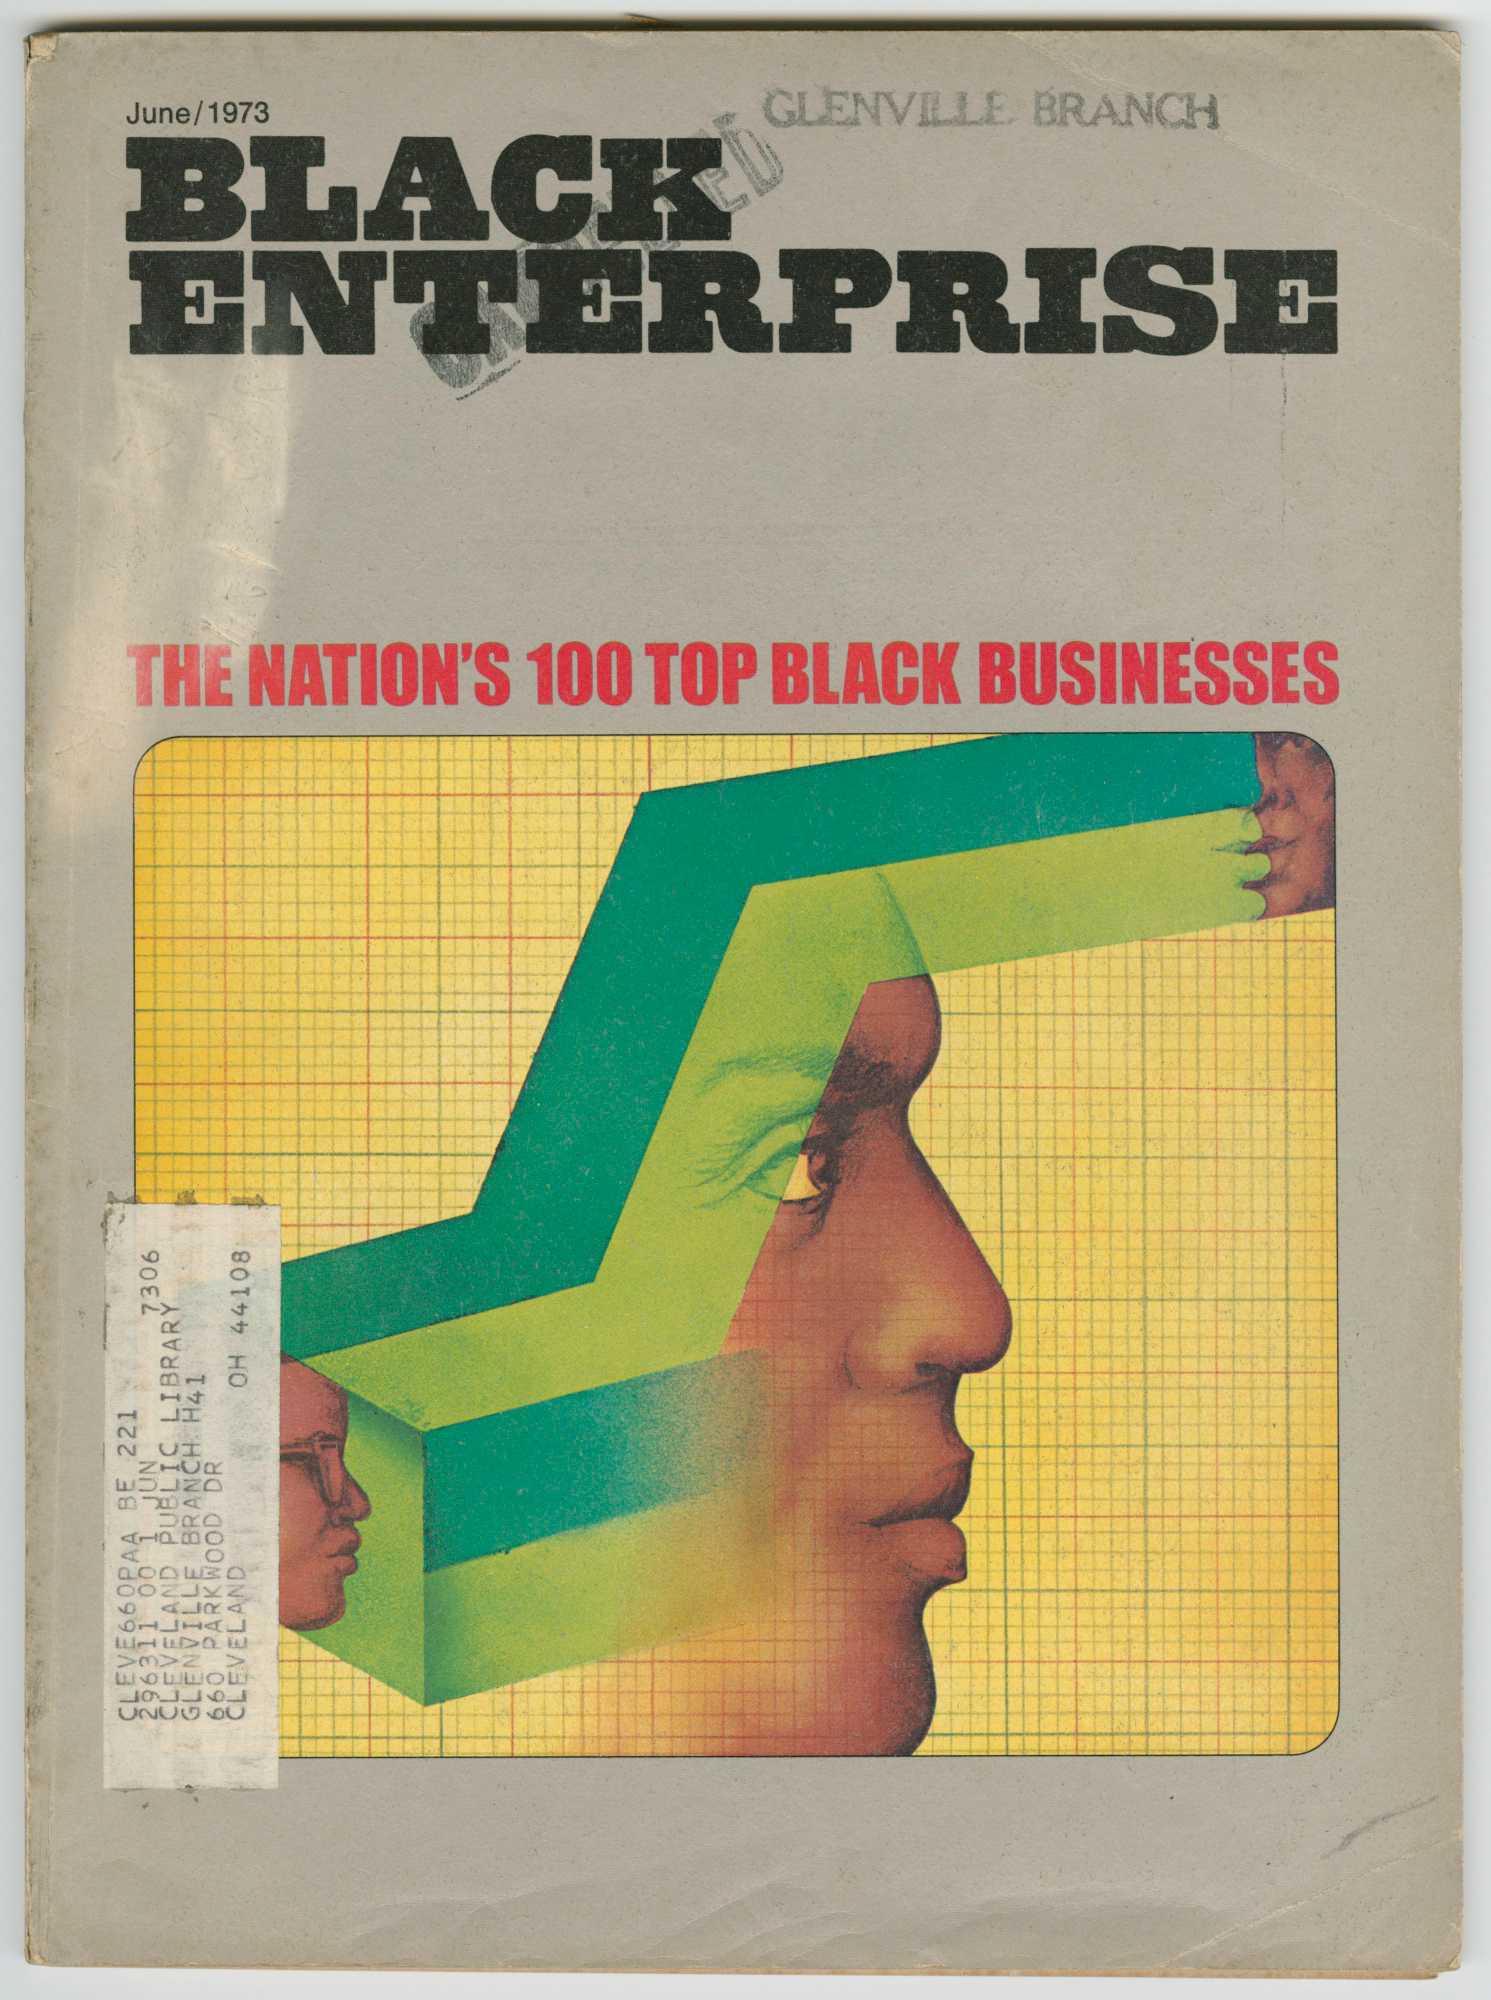 An issue of Black Enterprise magazine, June 1973, Volume 3, No. 11.